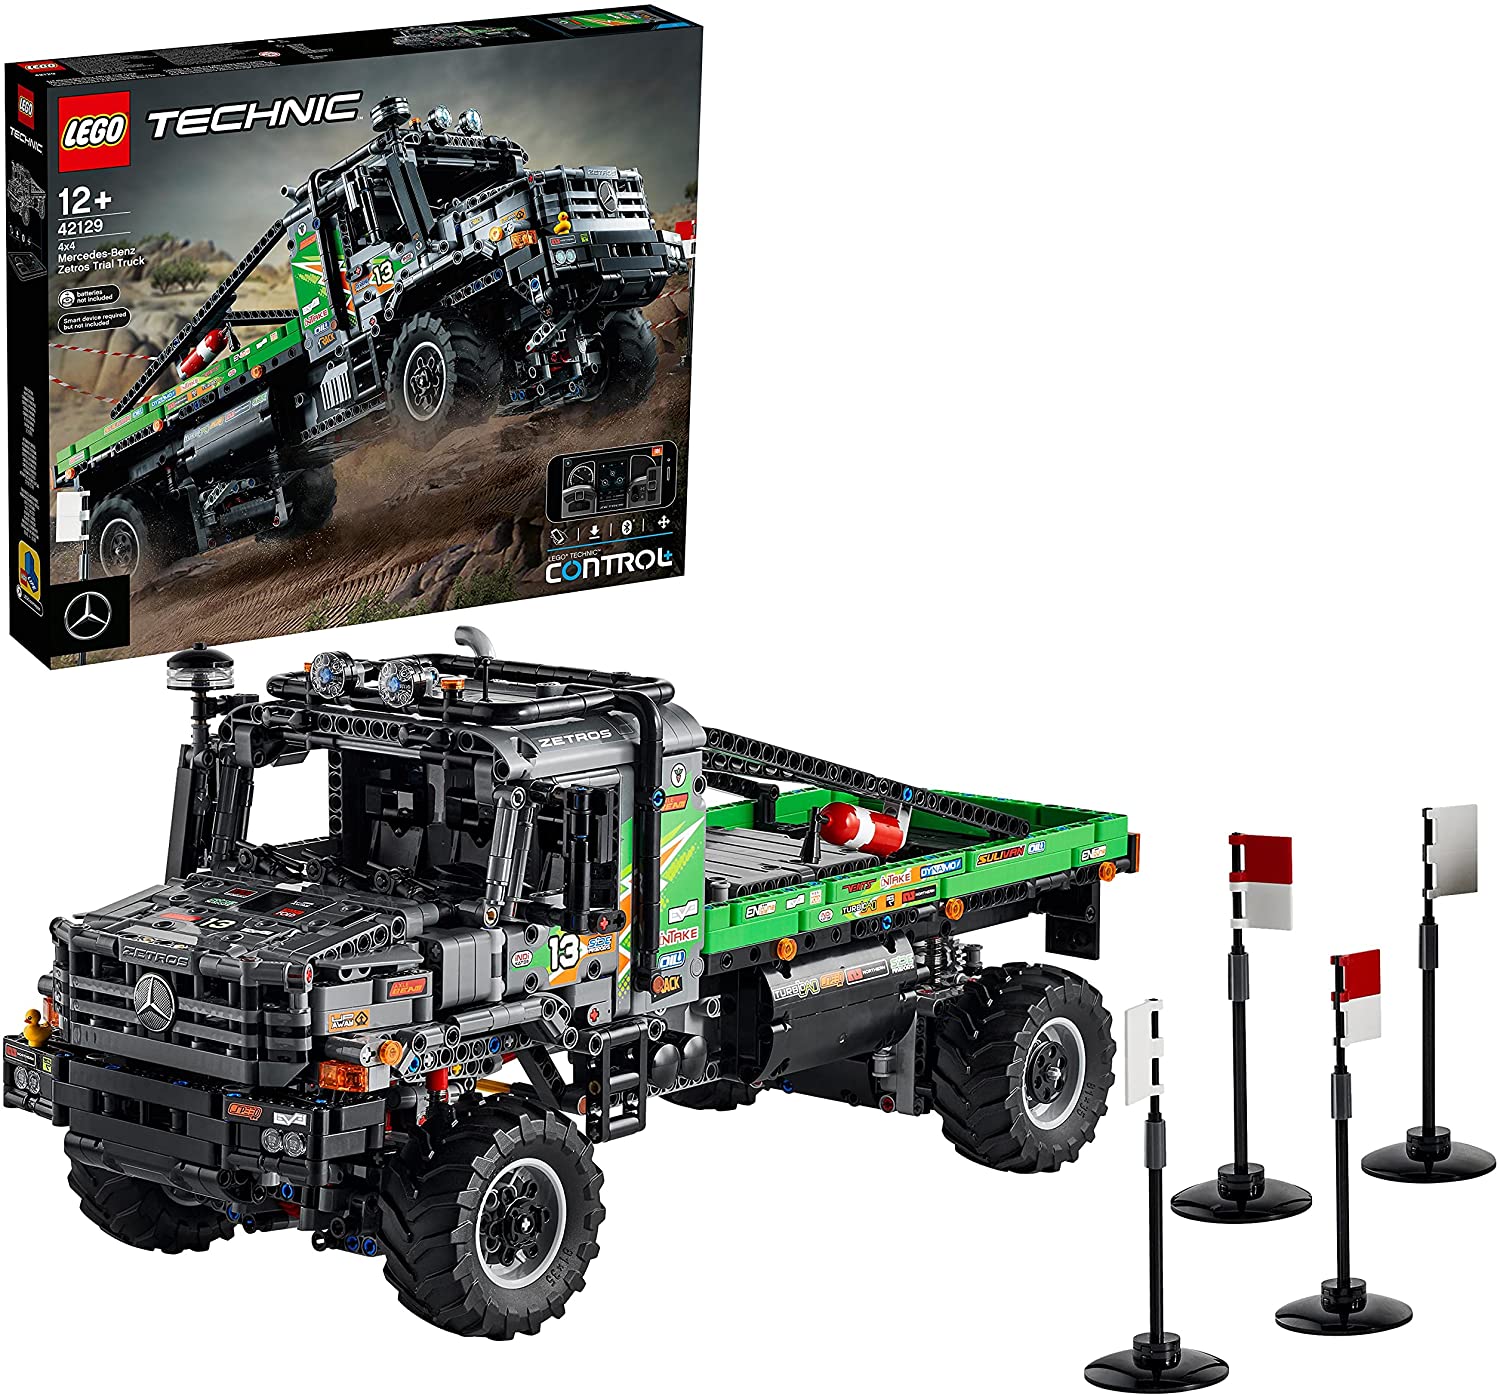 LEGO 42129 Technic 4x4 Mercedes-Benz Zetros Trial Truck Toy, RC Car, App-controlled Motor Vehicles Series